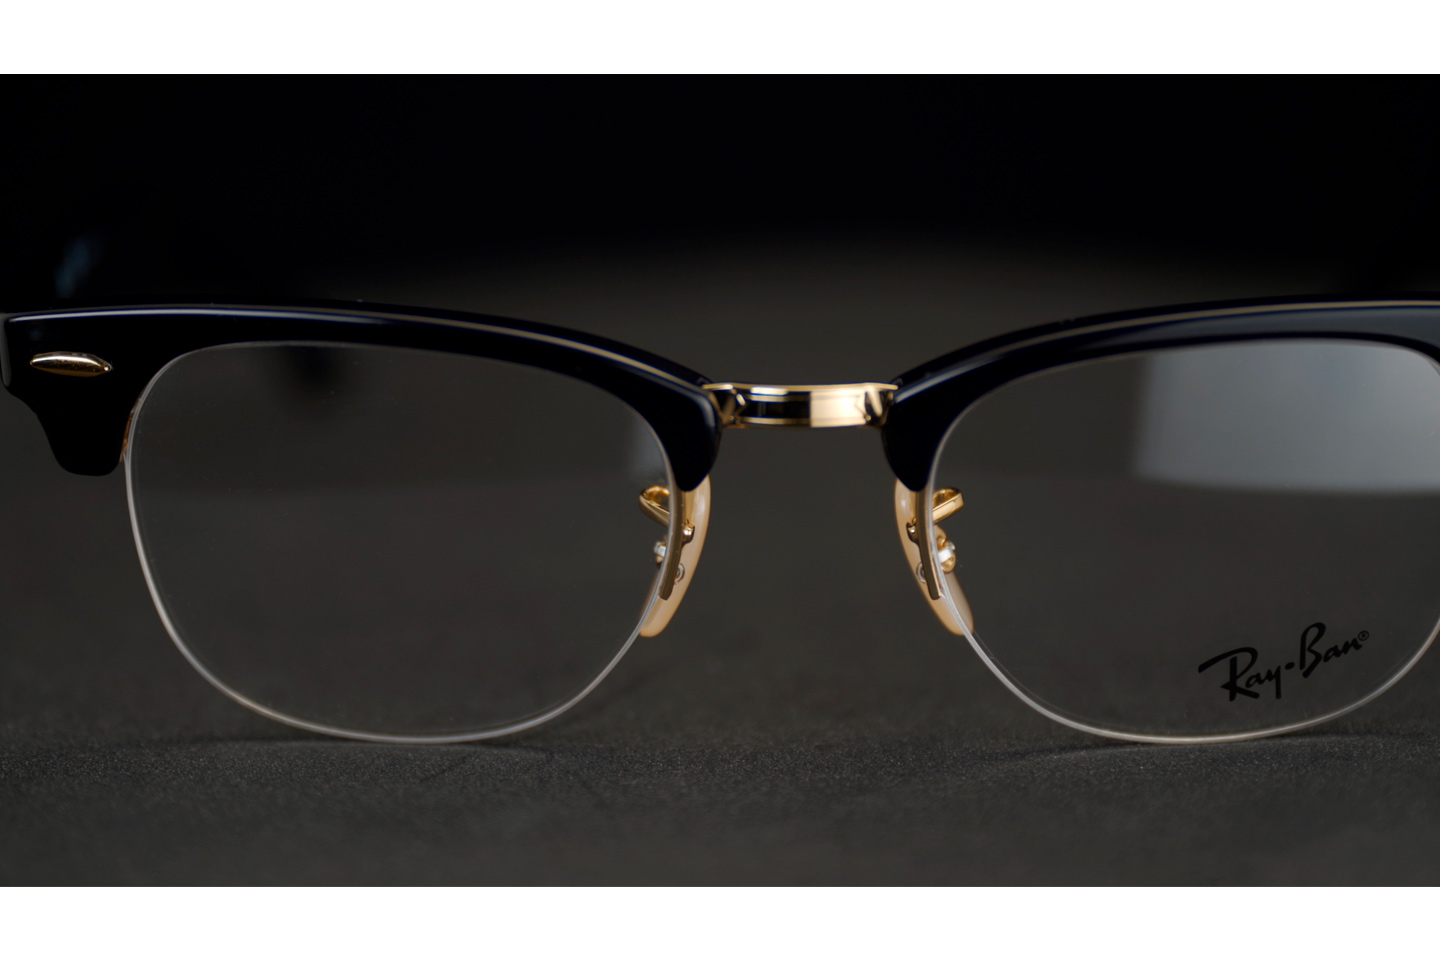 Ray-Ban RB5154 Clubmaster Review | Prescription Glasses | SportRx